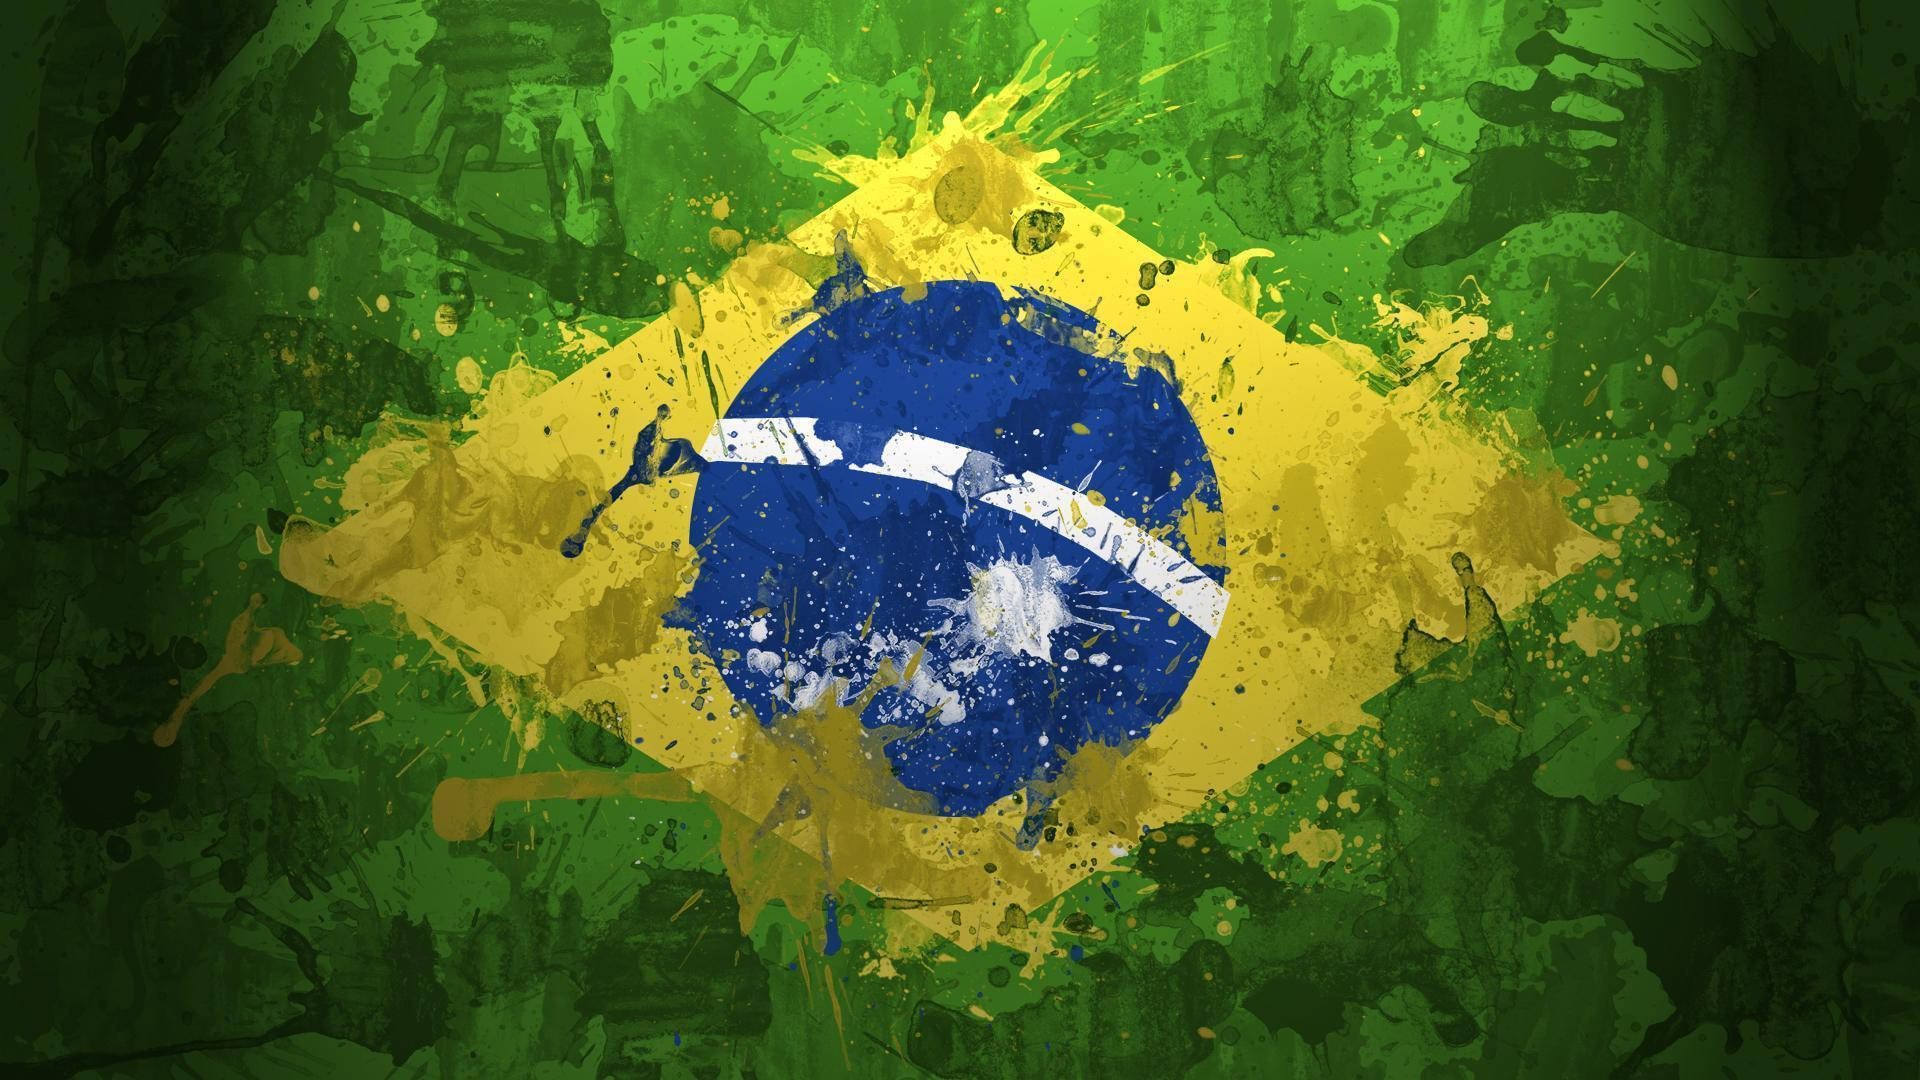 Caption: Vibrant Cartoon Illustration Of The Brazilian Flag In Textile Form